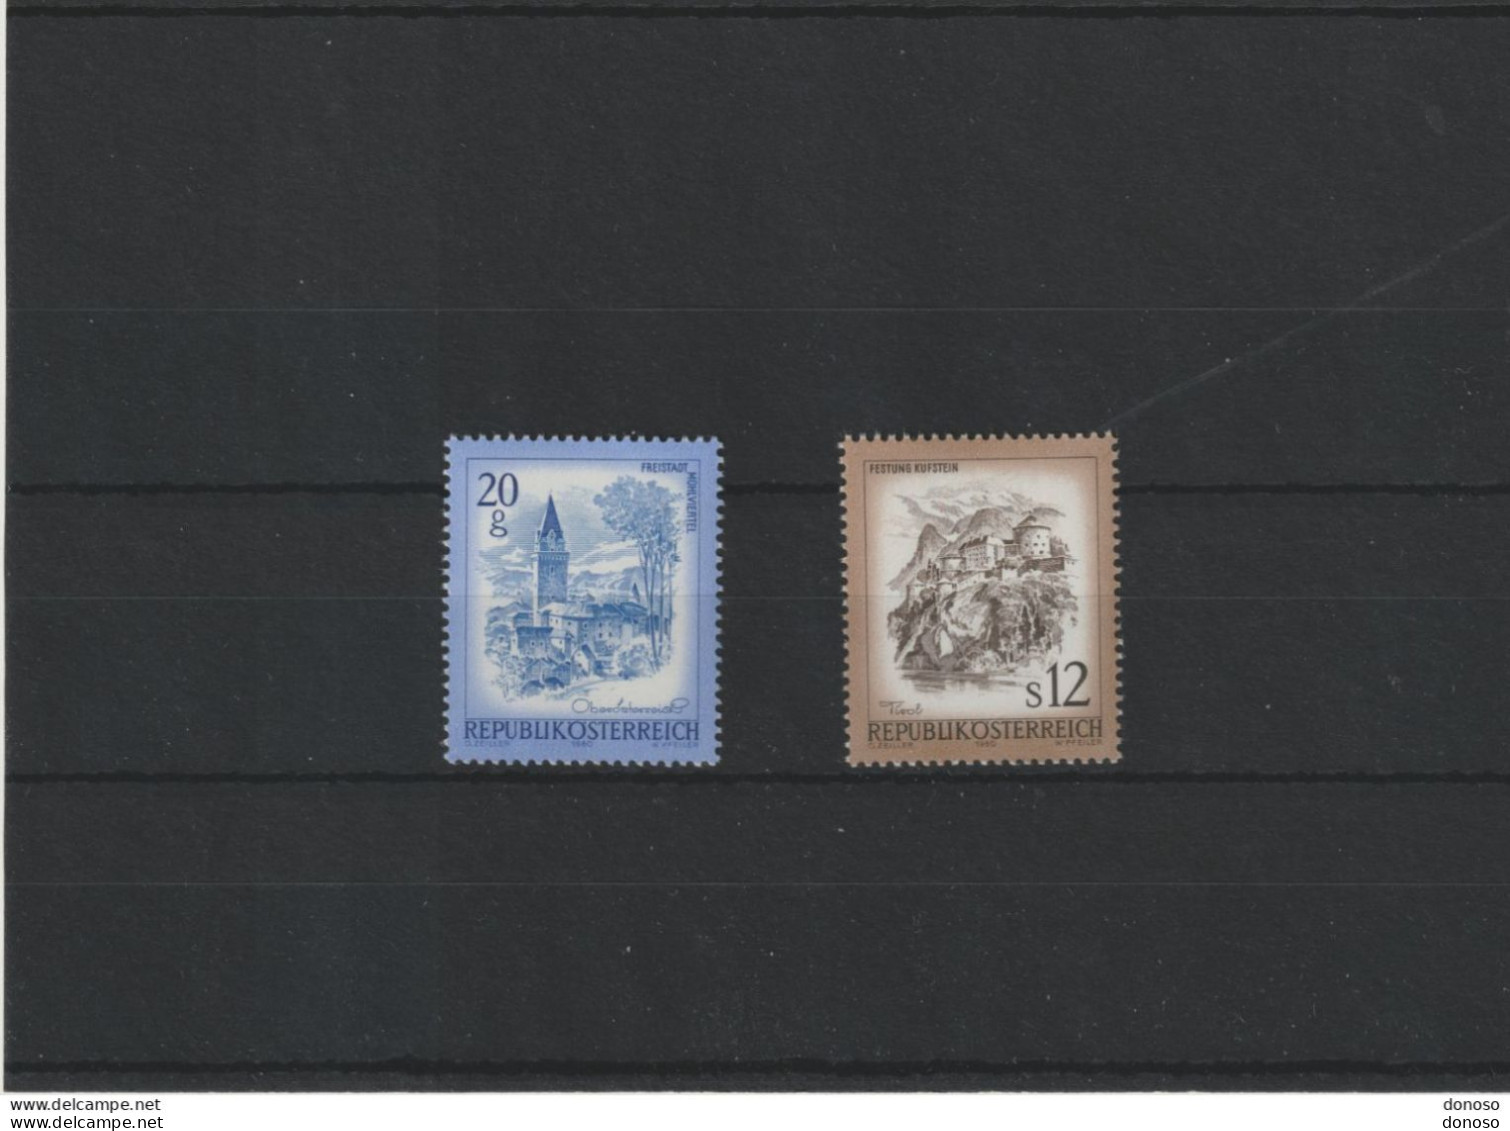 AUTRICHE 1980 Série Courante, Paysages Yvert 1478-1479 NEUF** MNH Cote 4,50 Euros - Nuovi